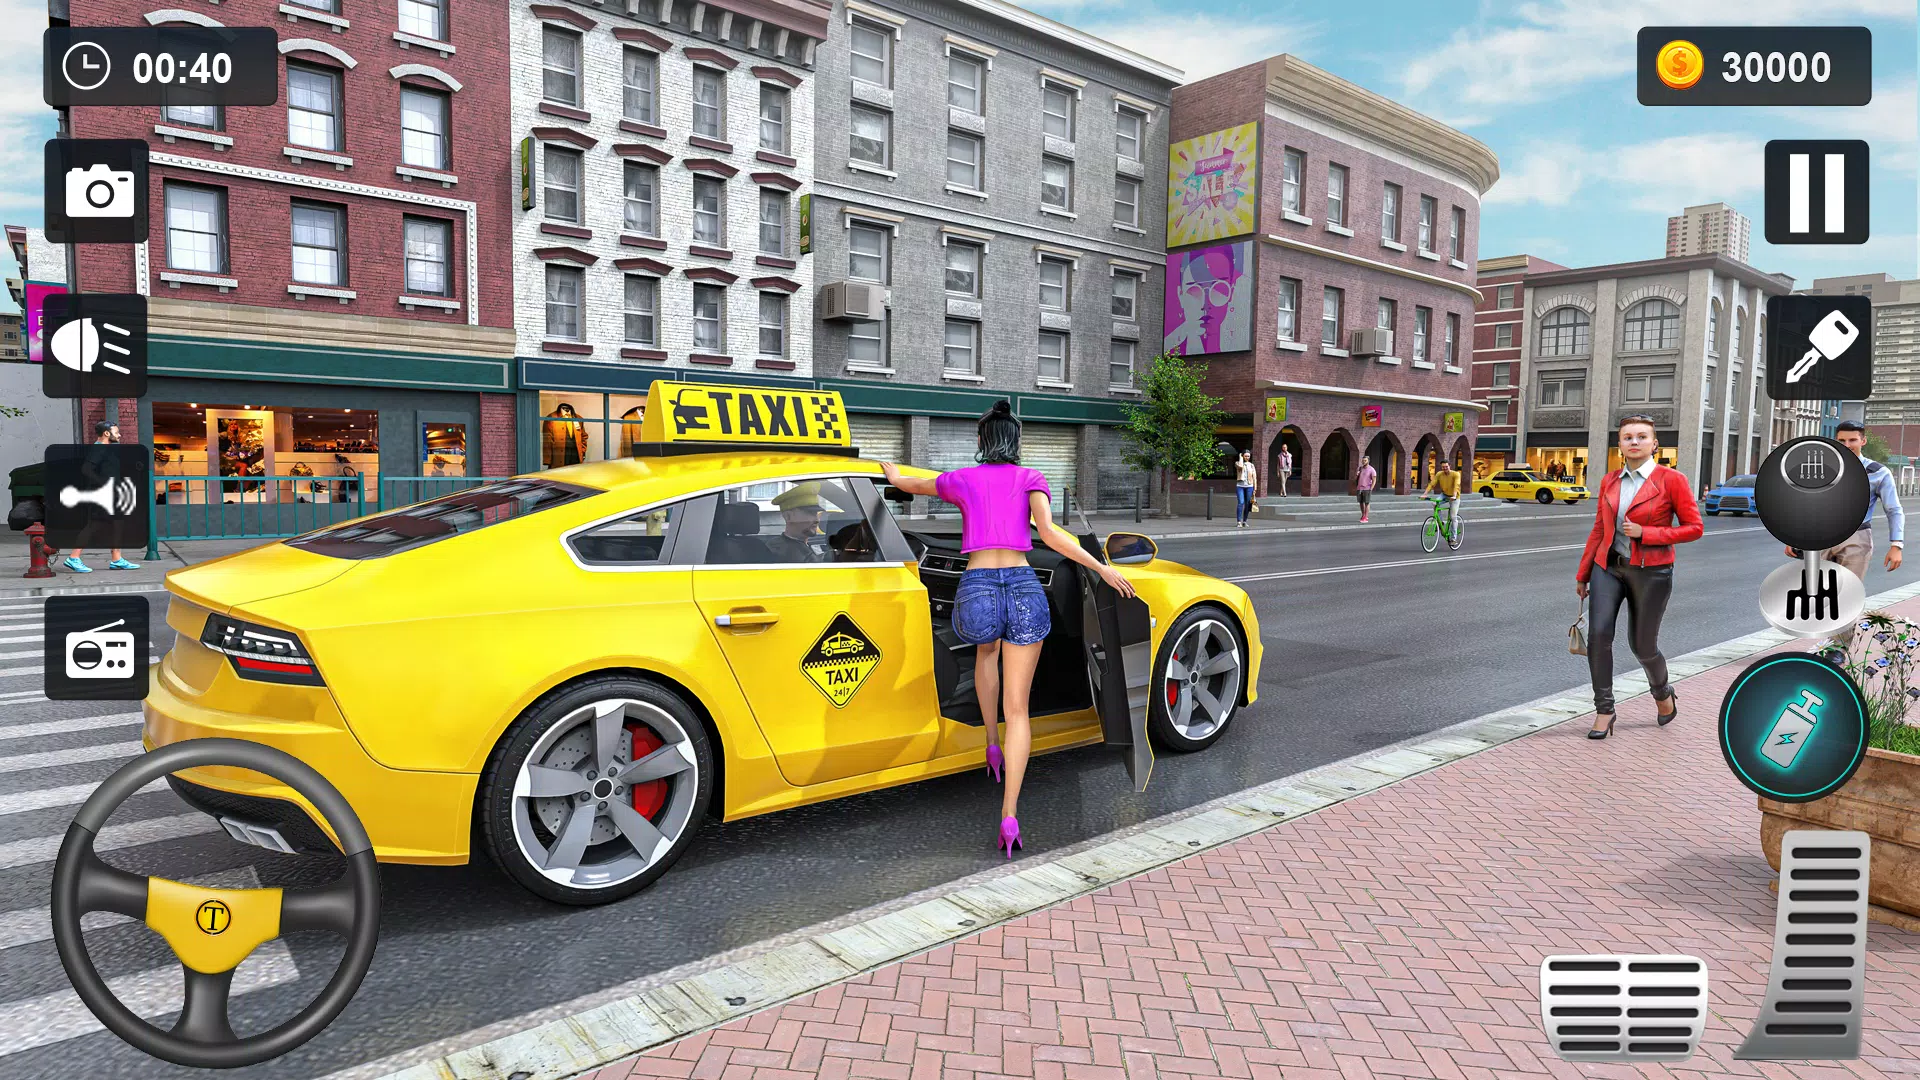 Jogo de Moto - Bike Taxi Driving Simulator - Jogos Android 